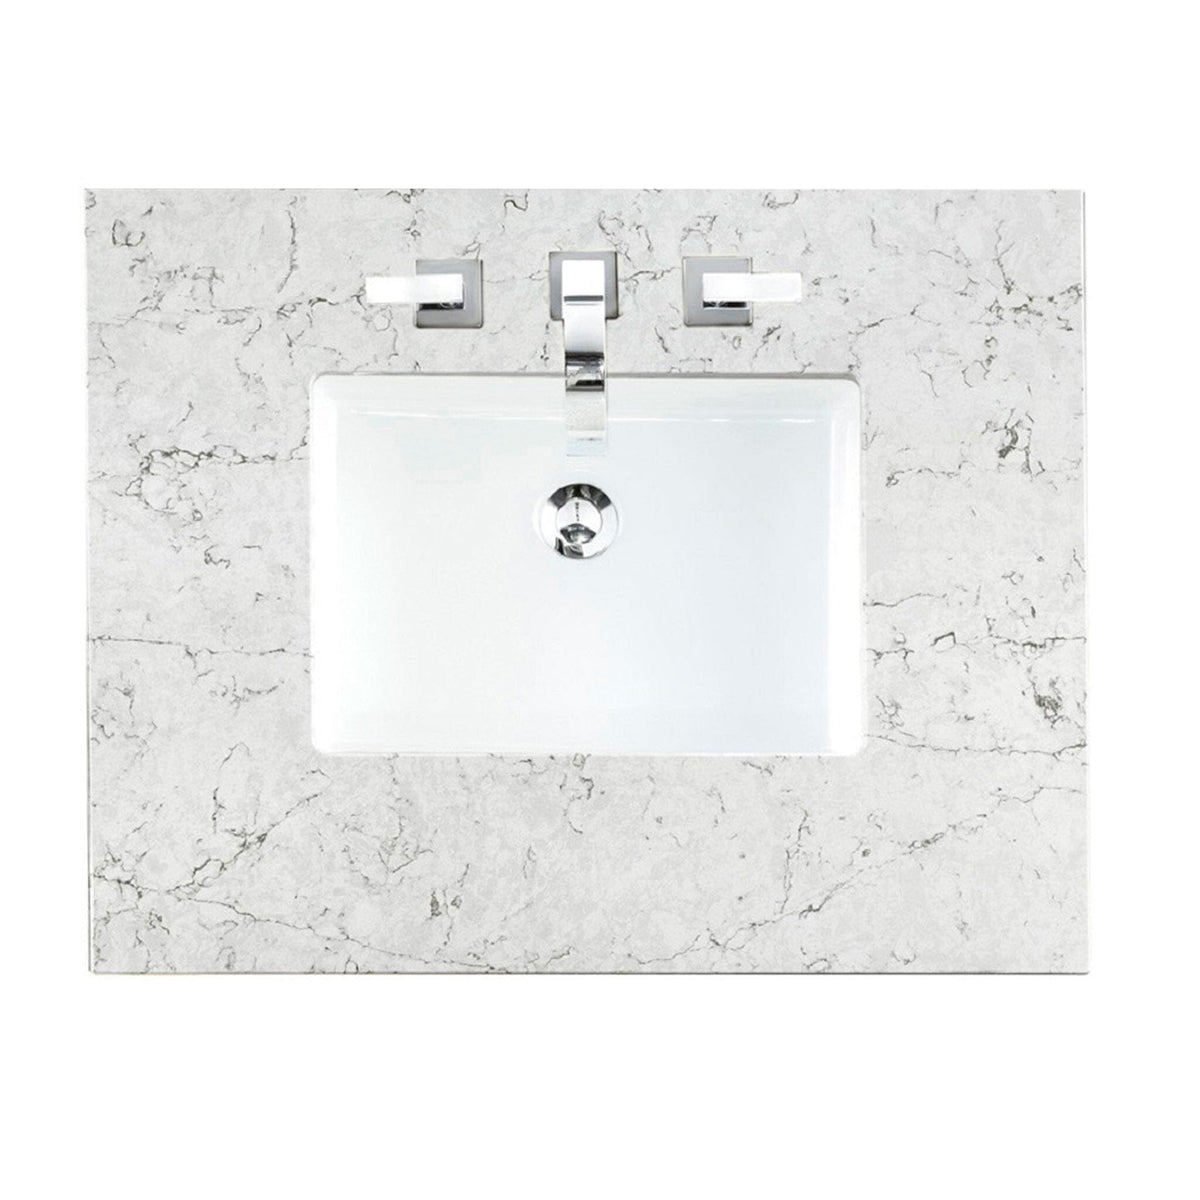 87" Addison Mid-Century Acacia Double Sink Bathroom Vanity Set with 3 cm Eternal Jasmine Pearl Quartz Top